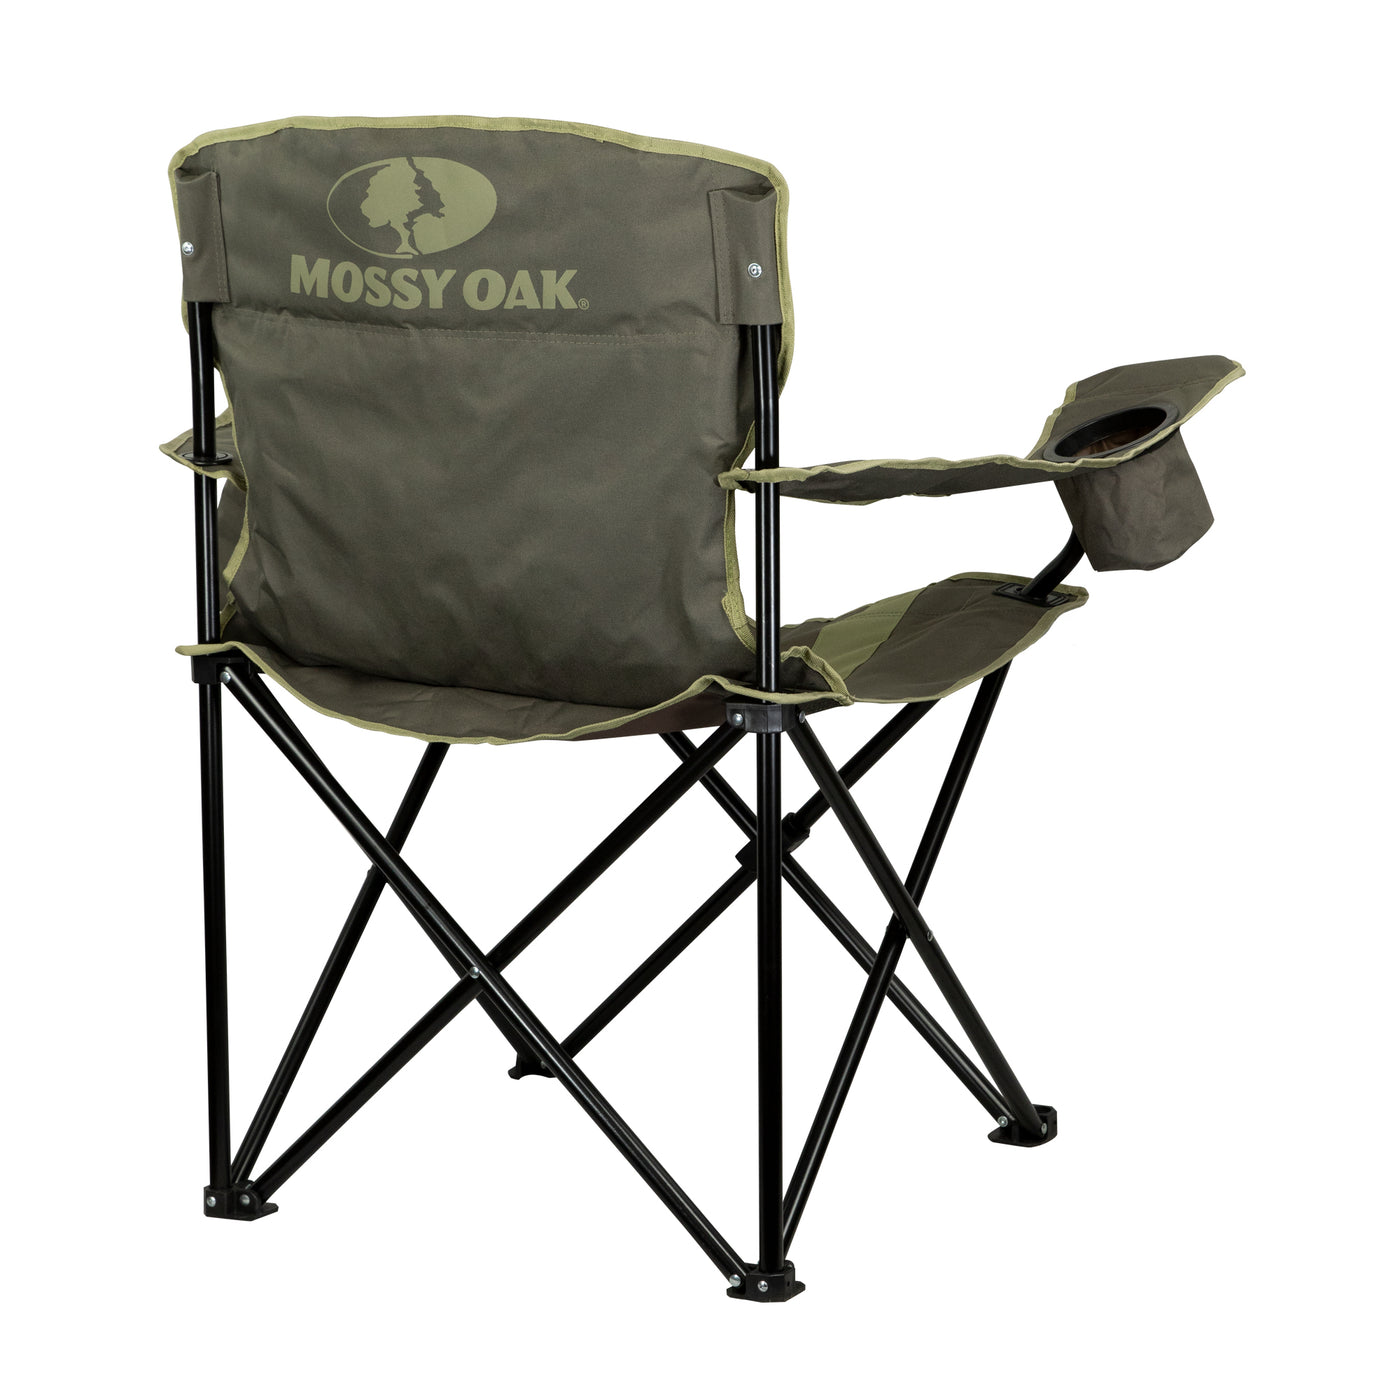 Mossy Oak Deluxe Folding Camping Chair